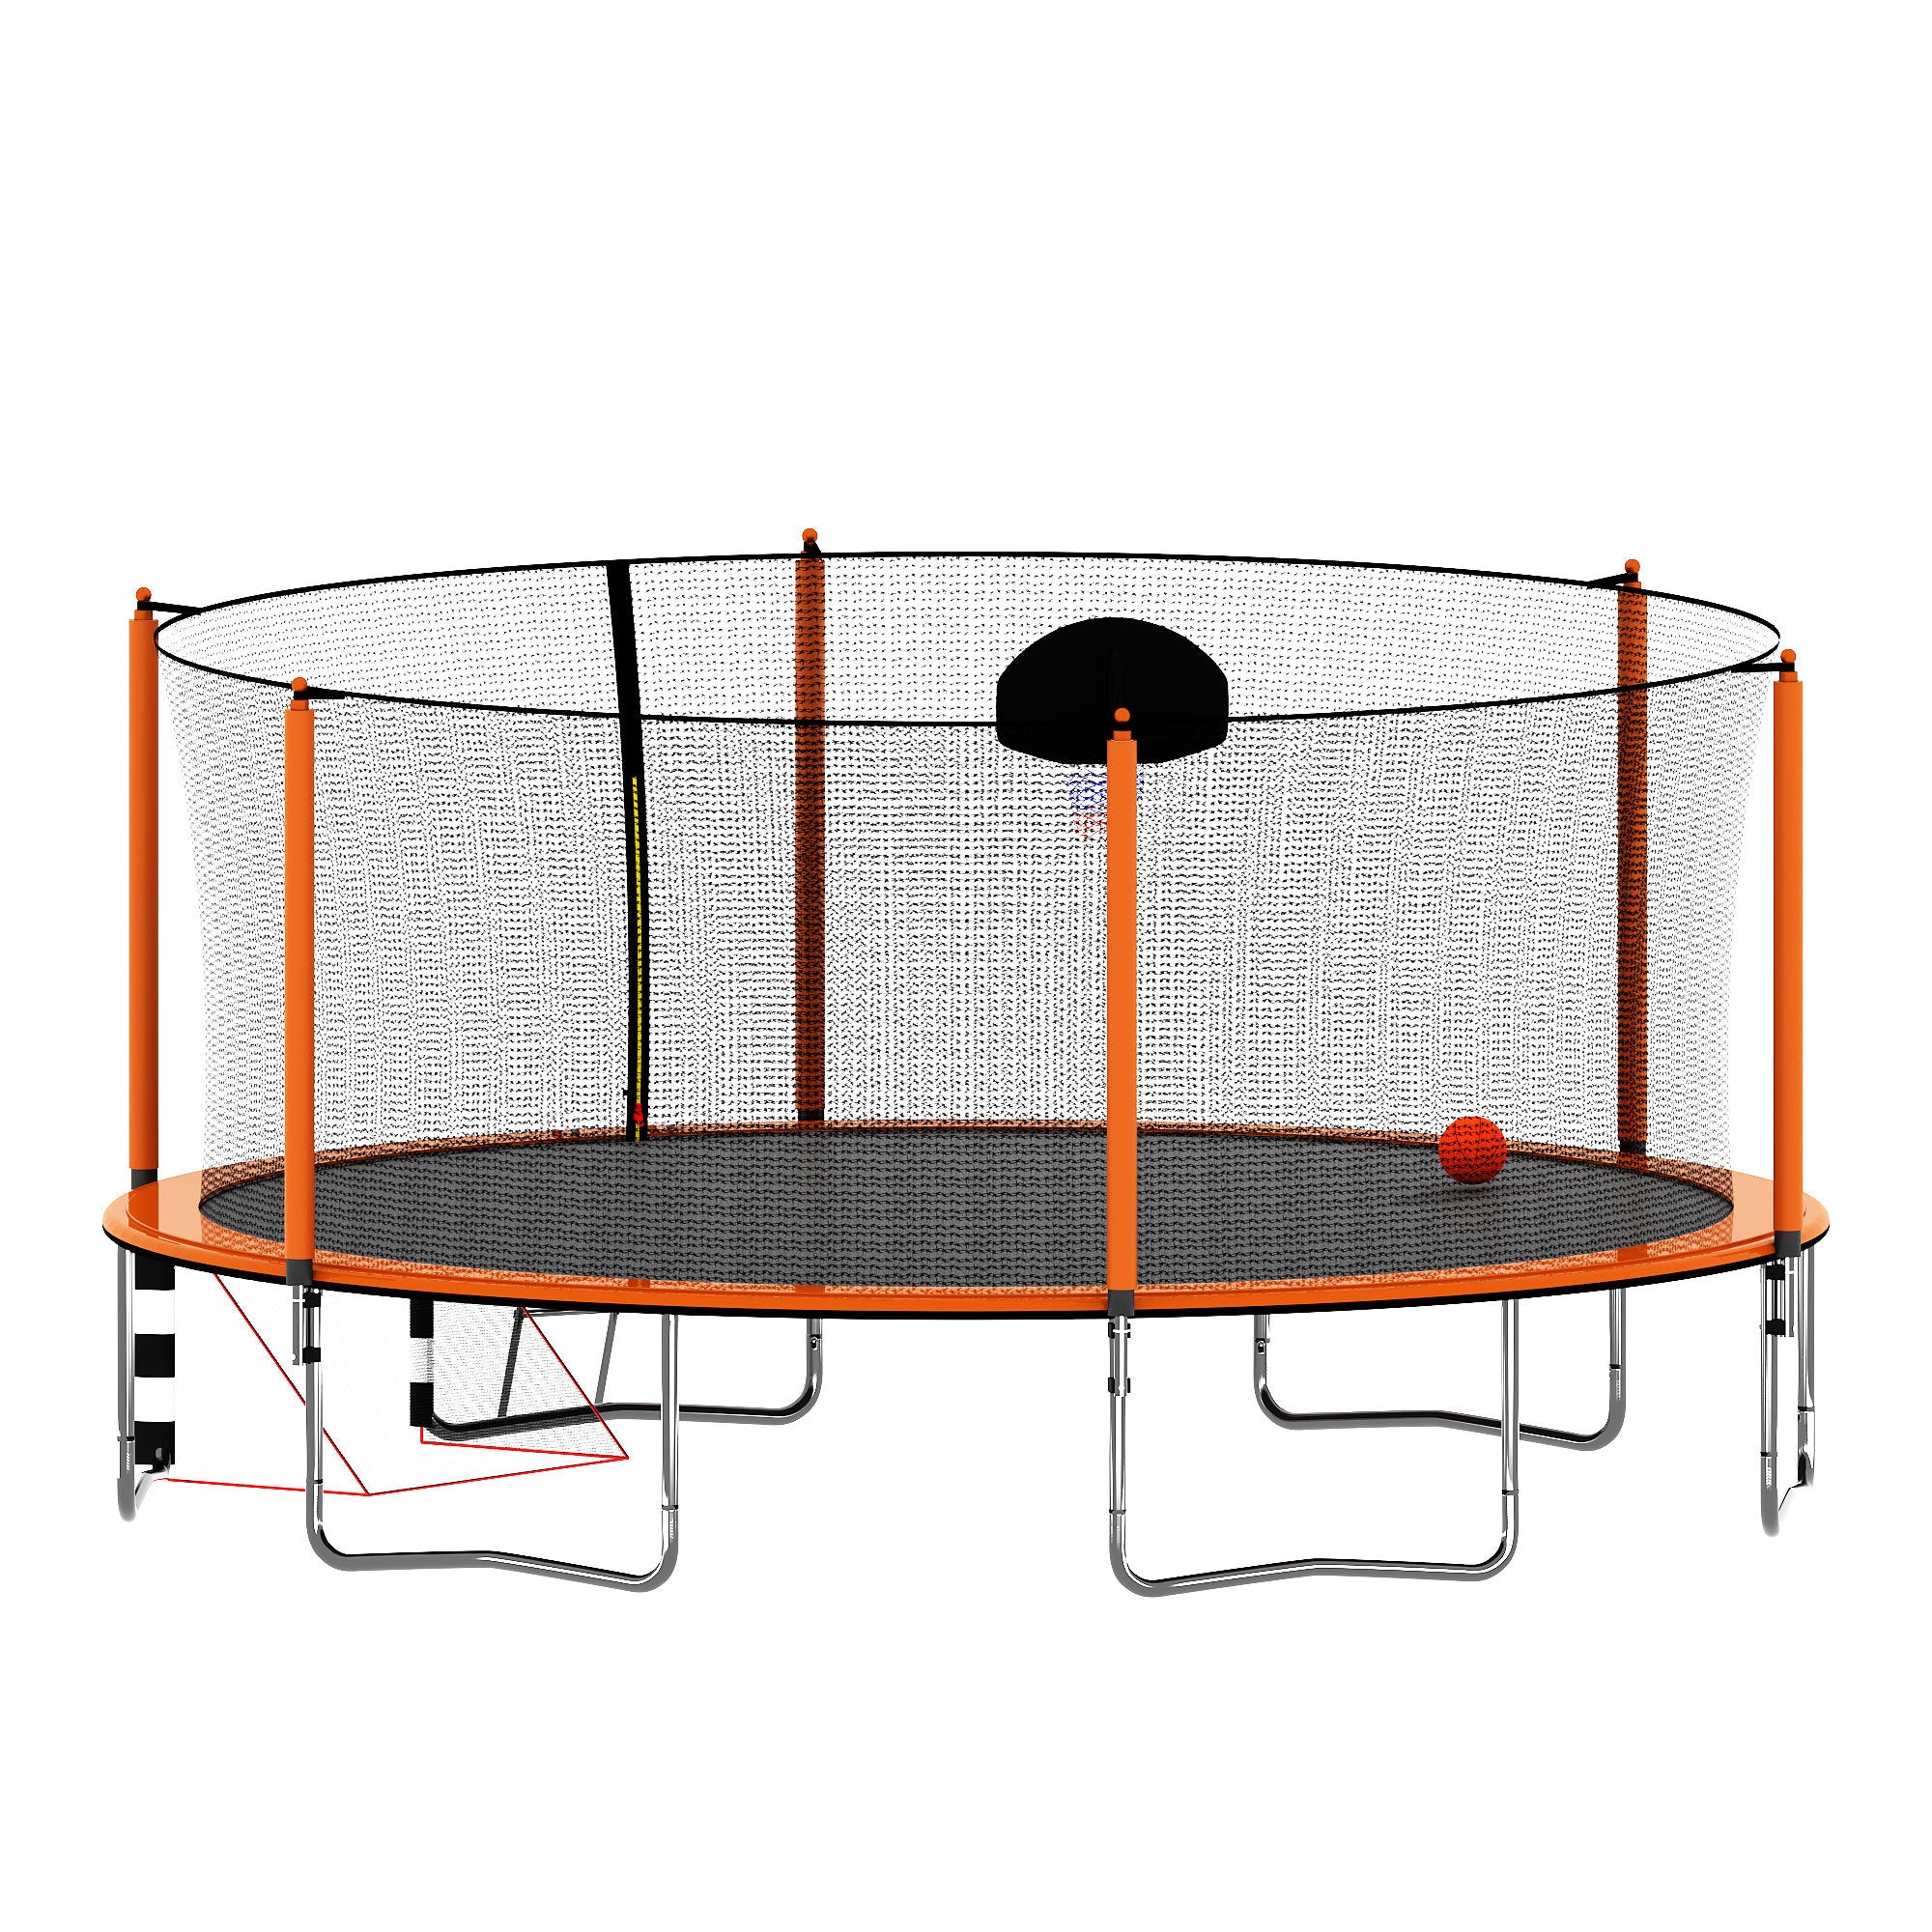 16FT Trampoline with Basketball Hoop pump and Ladder orange-steel